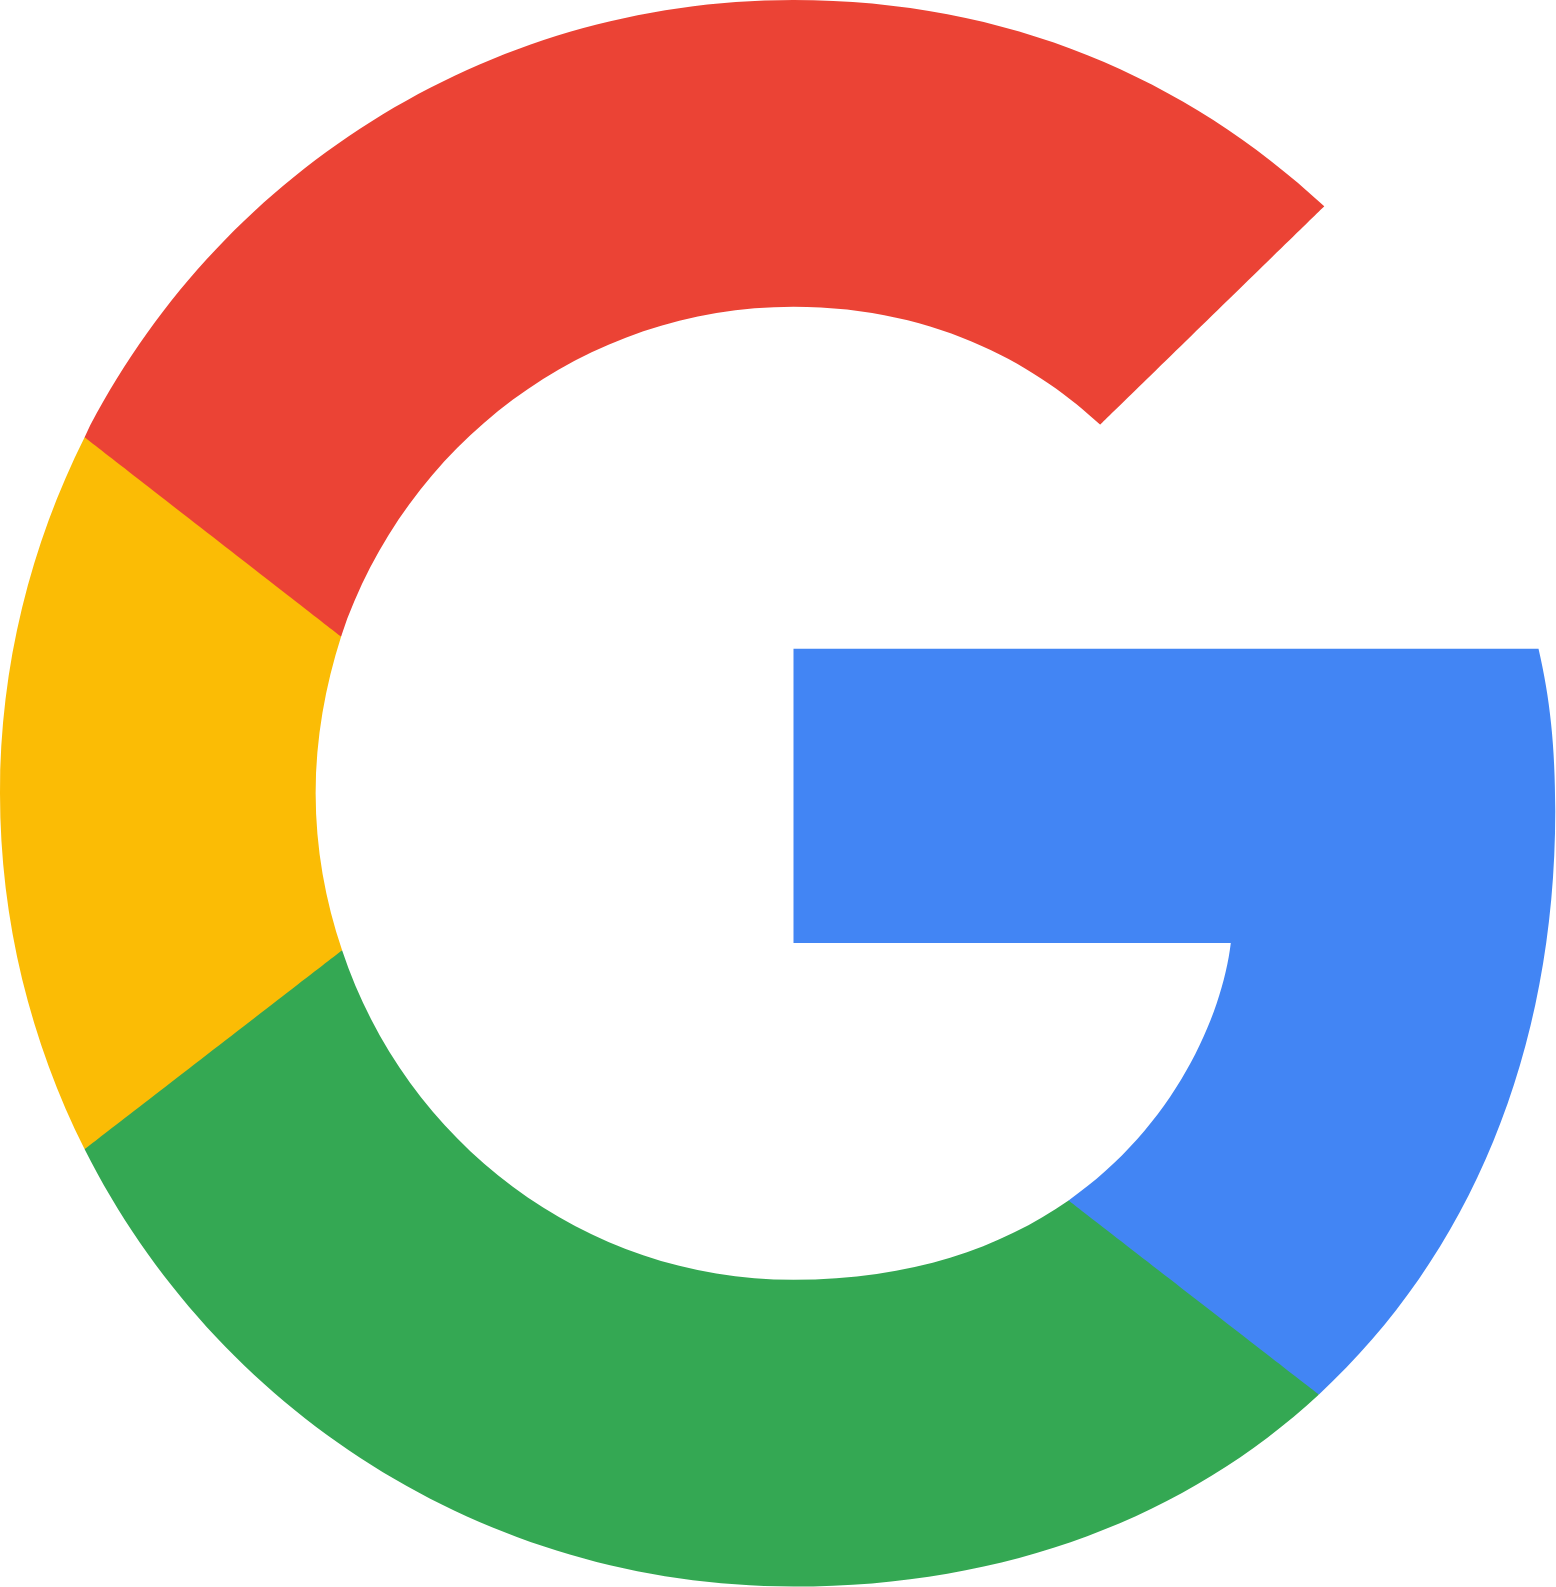 Alphabet (Google) logo (PNG transparent)